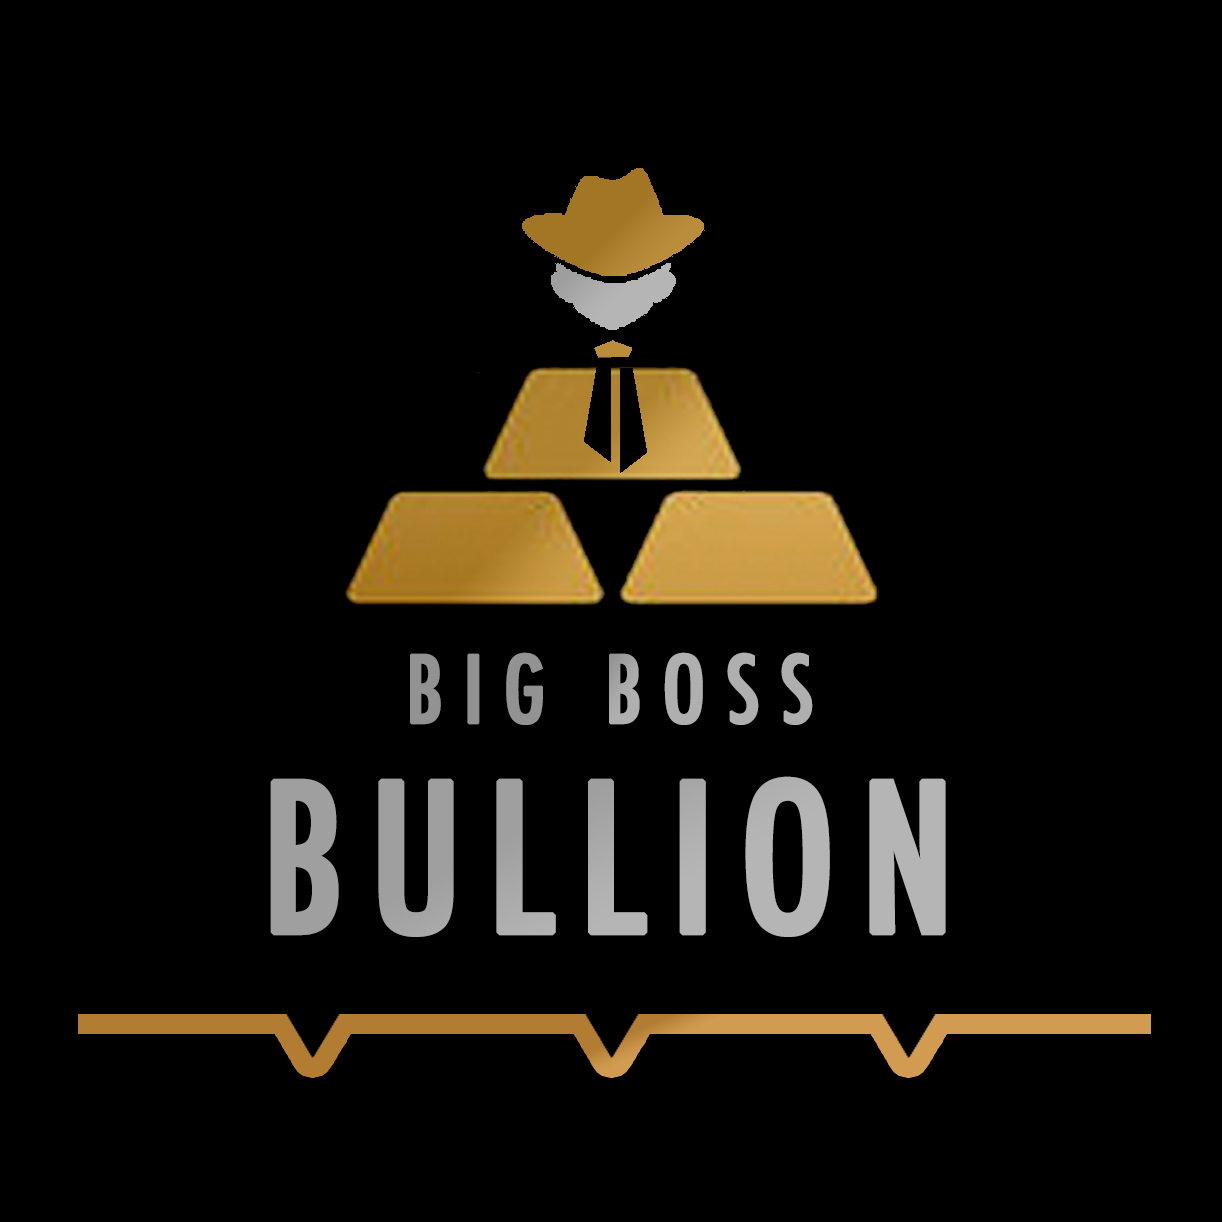 Big Boss Bullion